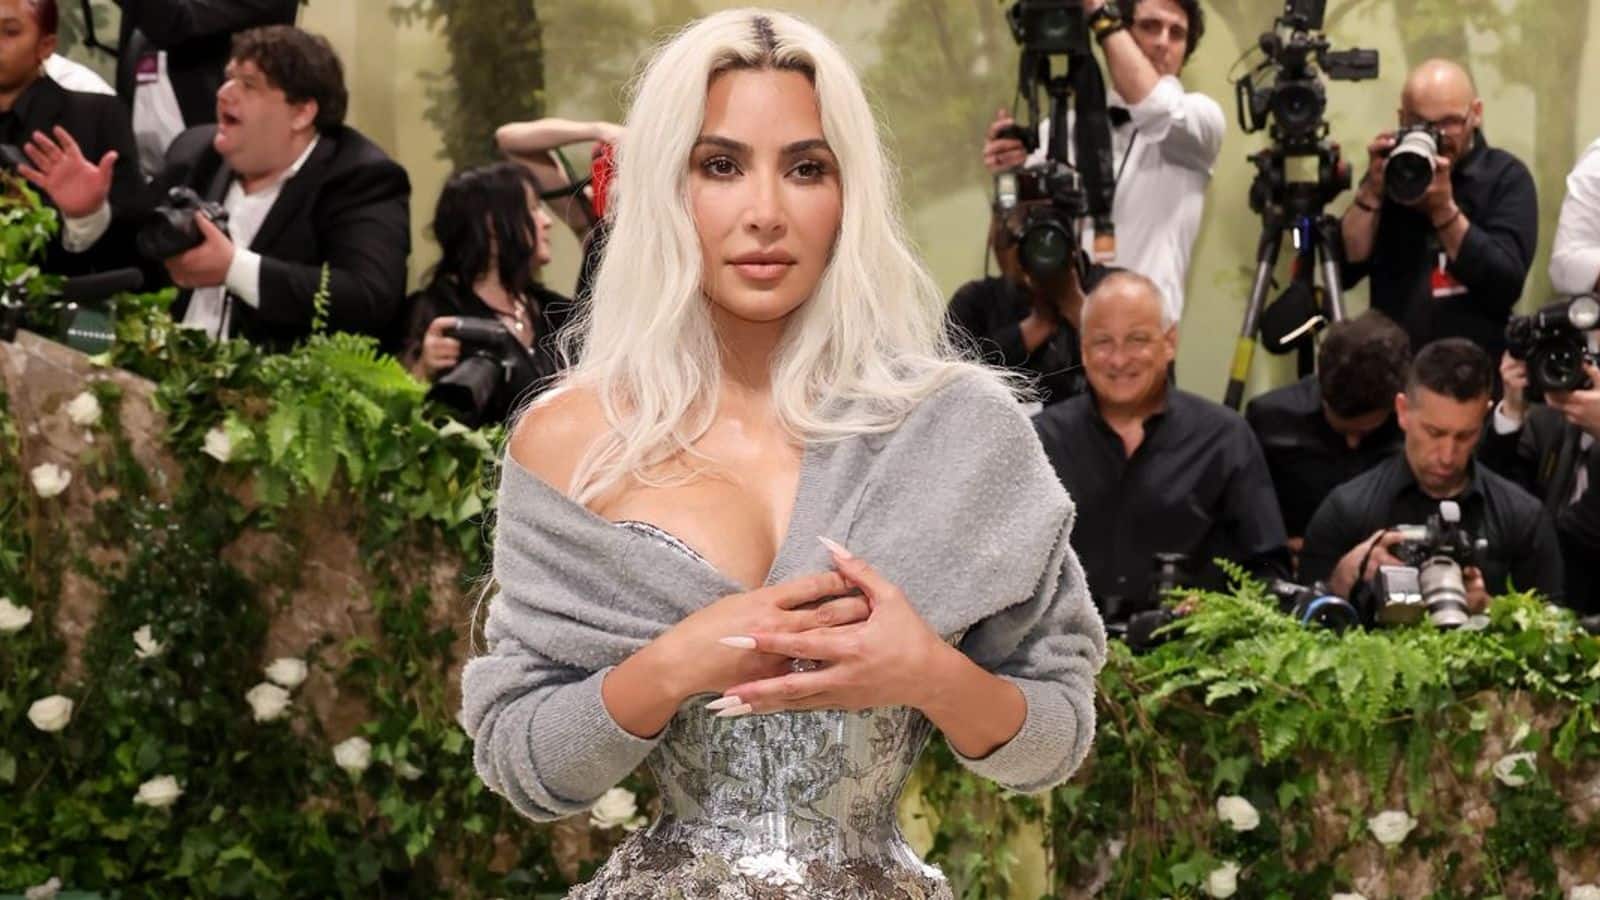 Met Gala: Kim Kardashian matches metallic corset with comfortable cardigan